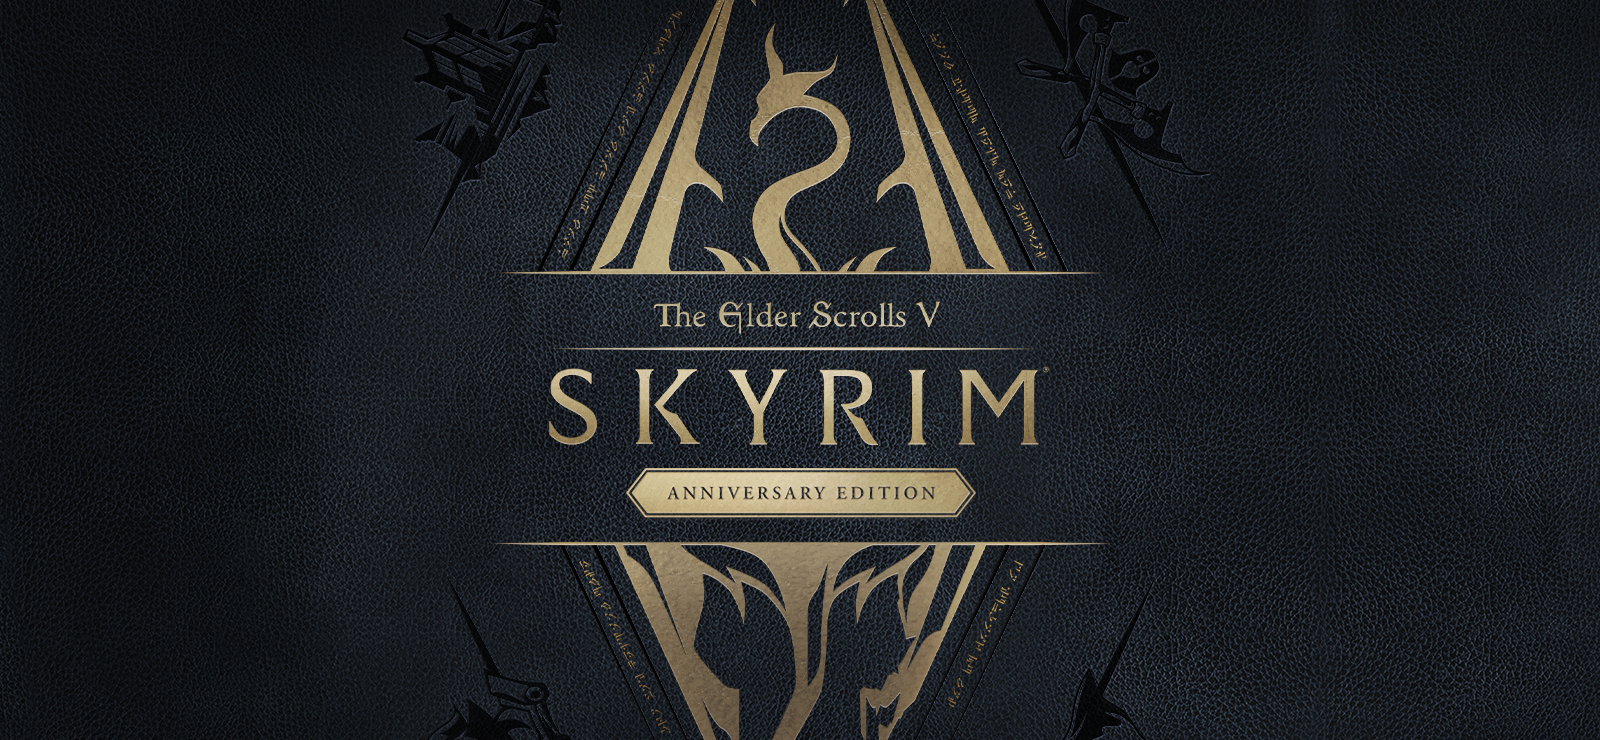 BESTSELLER - The Elder Scrolls V: Skyrim Anniversary Edition